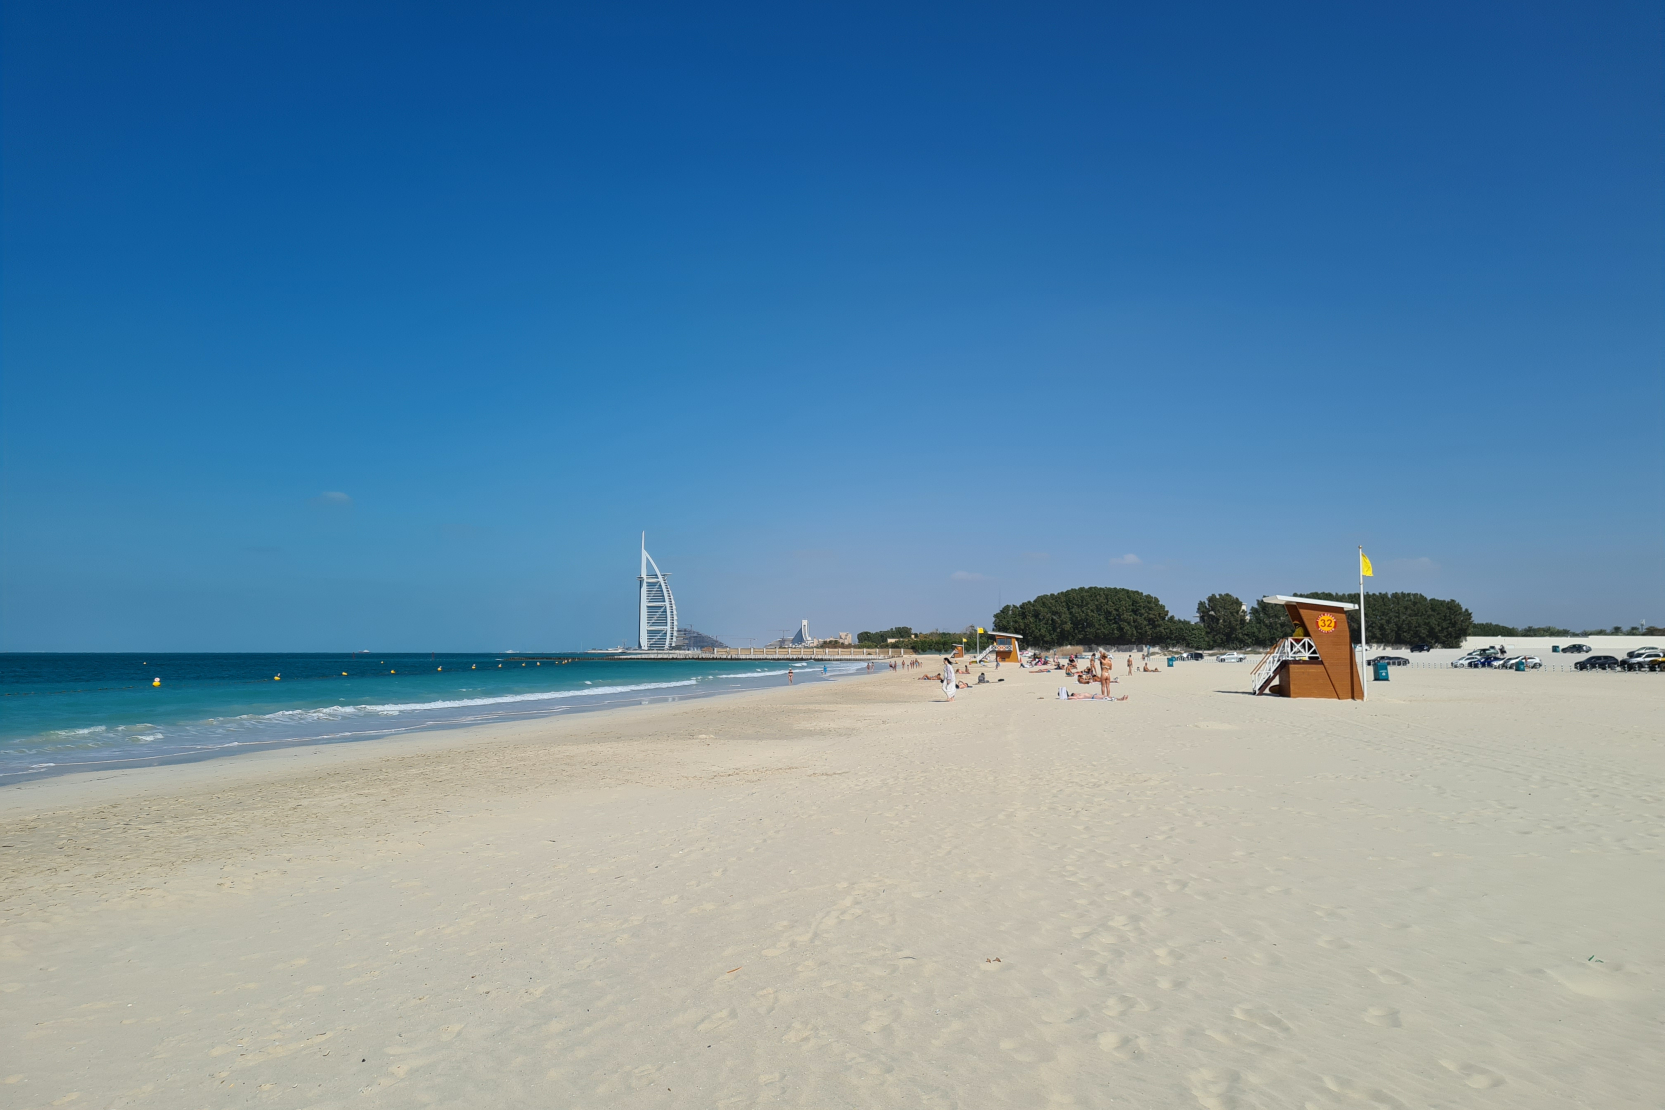 Al Sufouh Beach, a renowned beach in Dubai known as the 'secret' or 'hidden' beach, has been temporarily blocked.